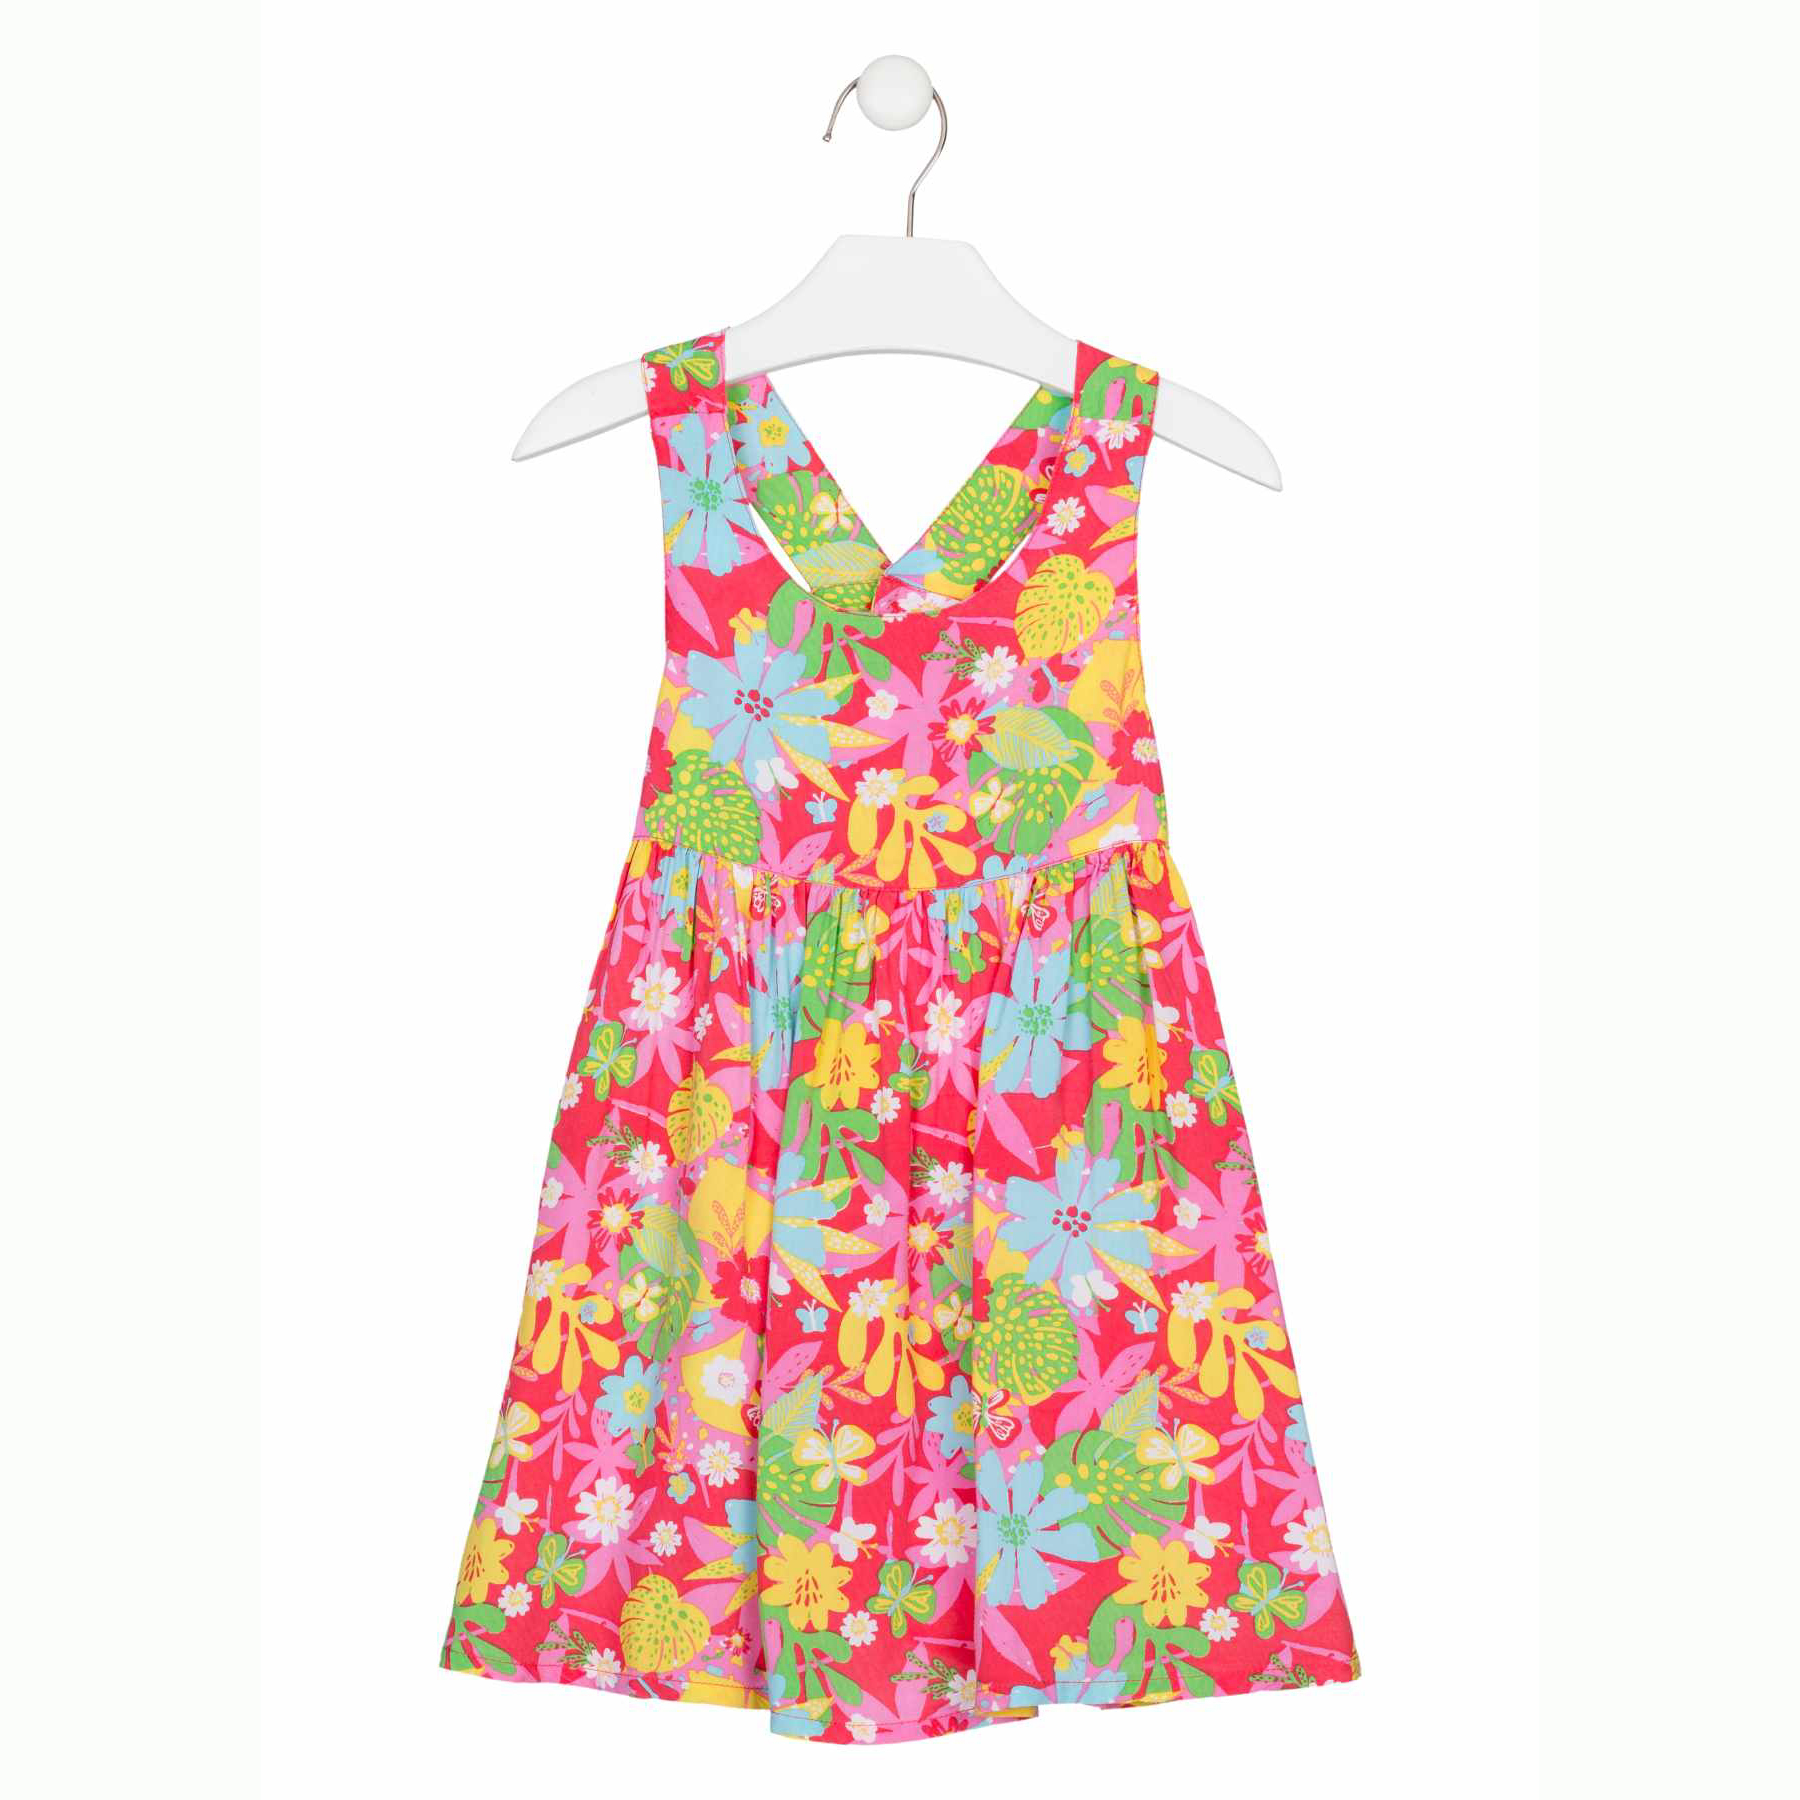 Bright floral dress 1